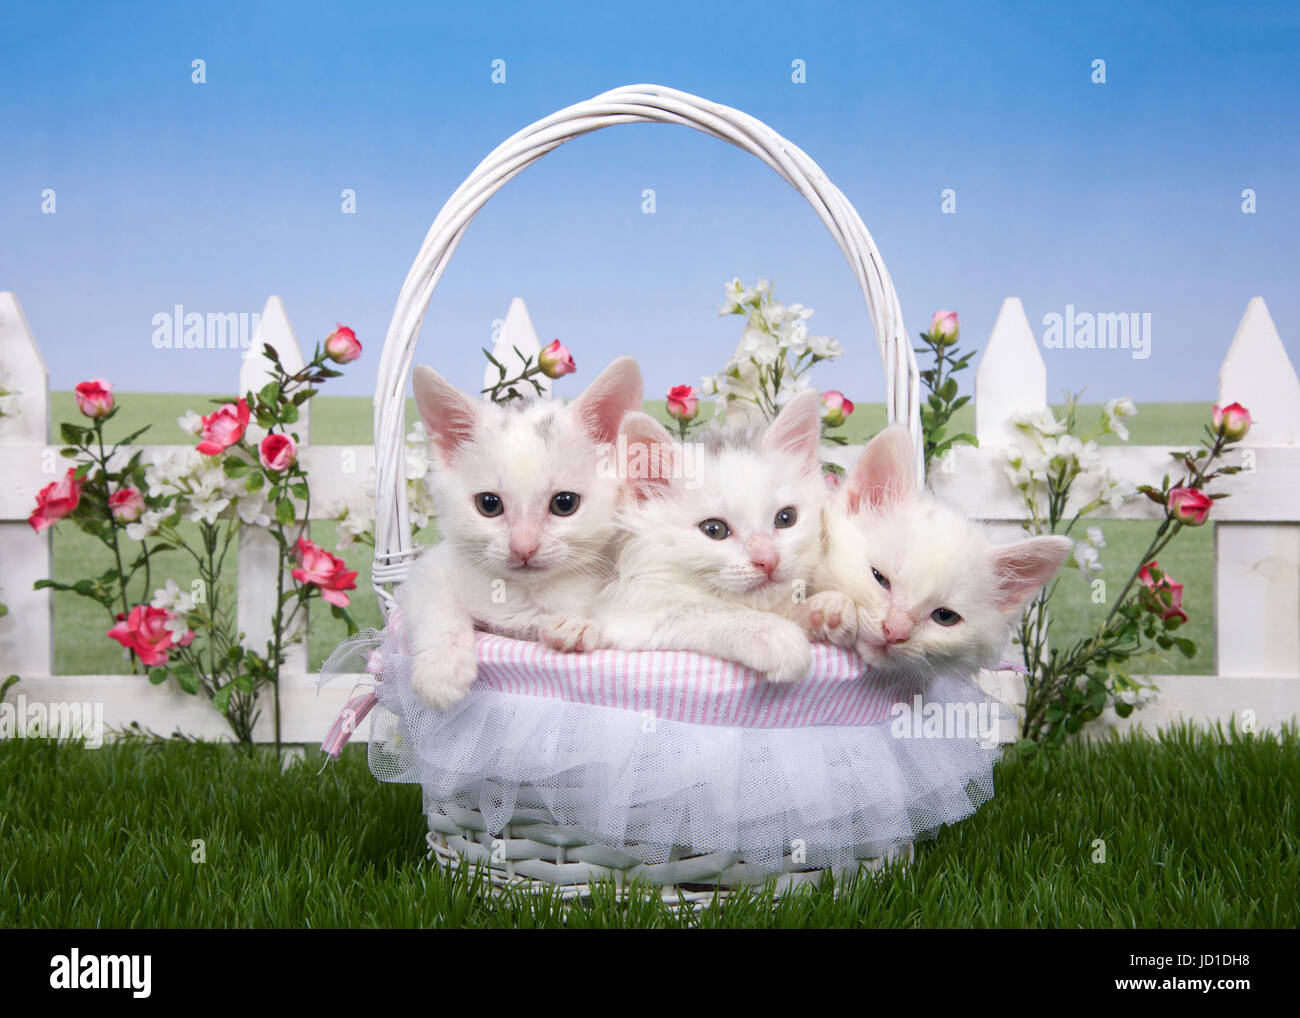 Three fluffy white kittens sitting in a white wicker basket ...